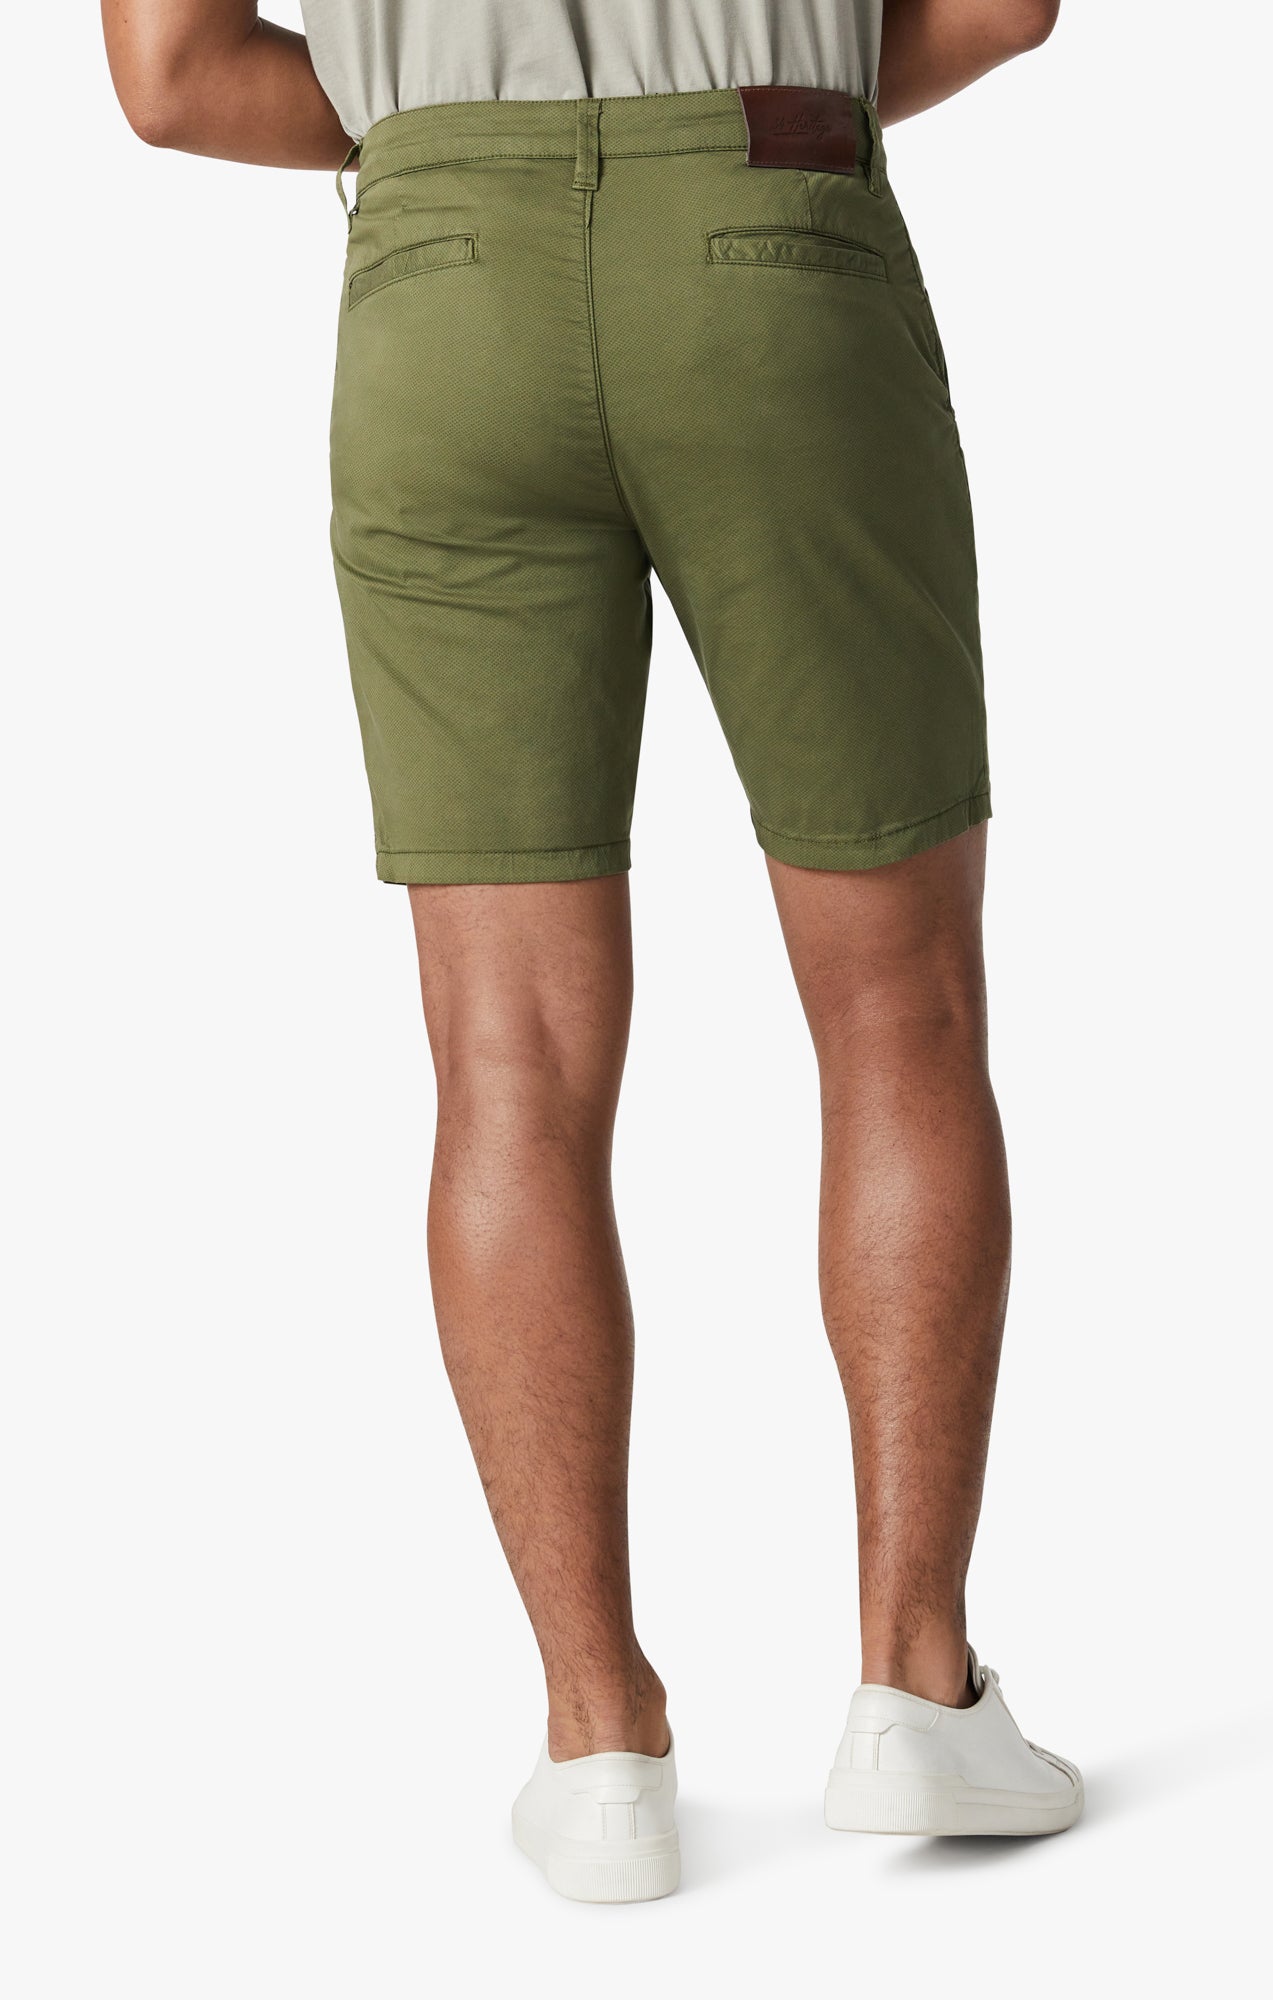 Arizona Shorts In Green Tie Print Image 4